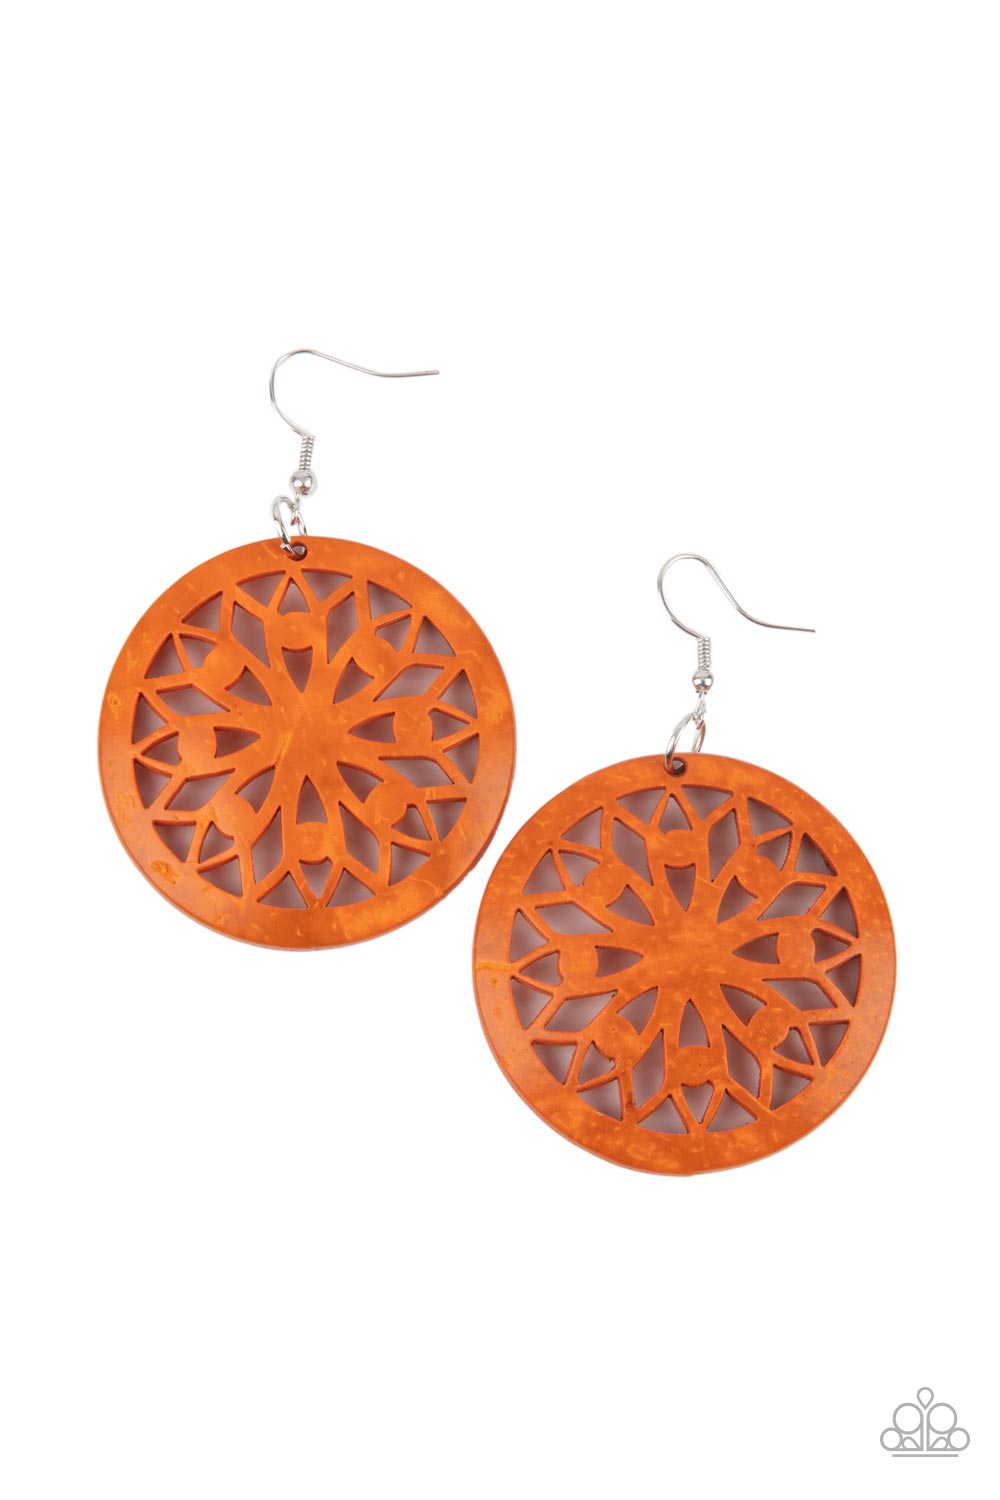 Ocean Canopy Orange Earrings - Paparazzi Accessories- lightbox - CarasShop.com - $5 Jewelry by Cara Jewels